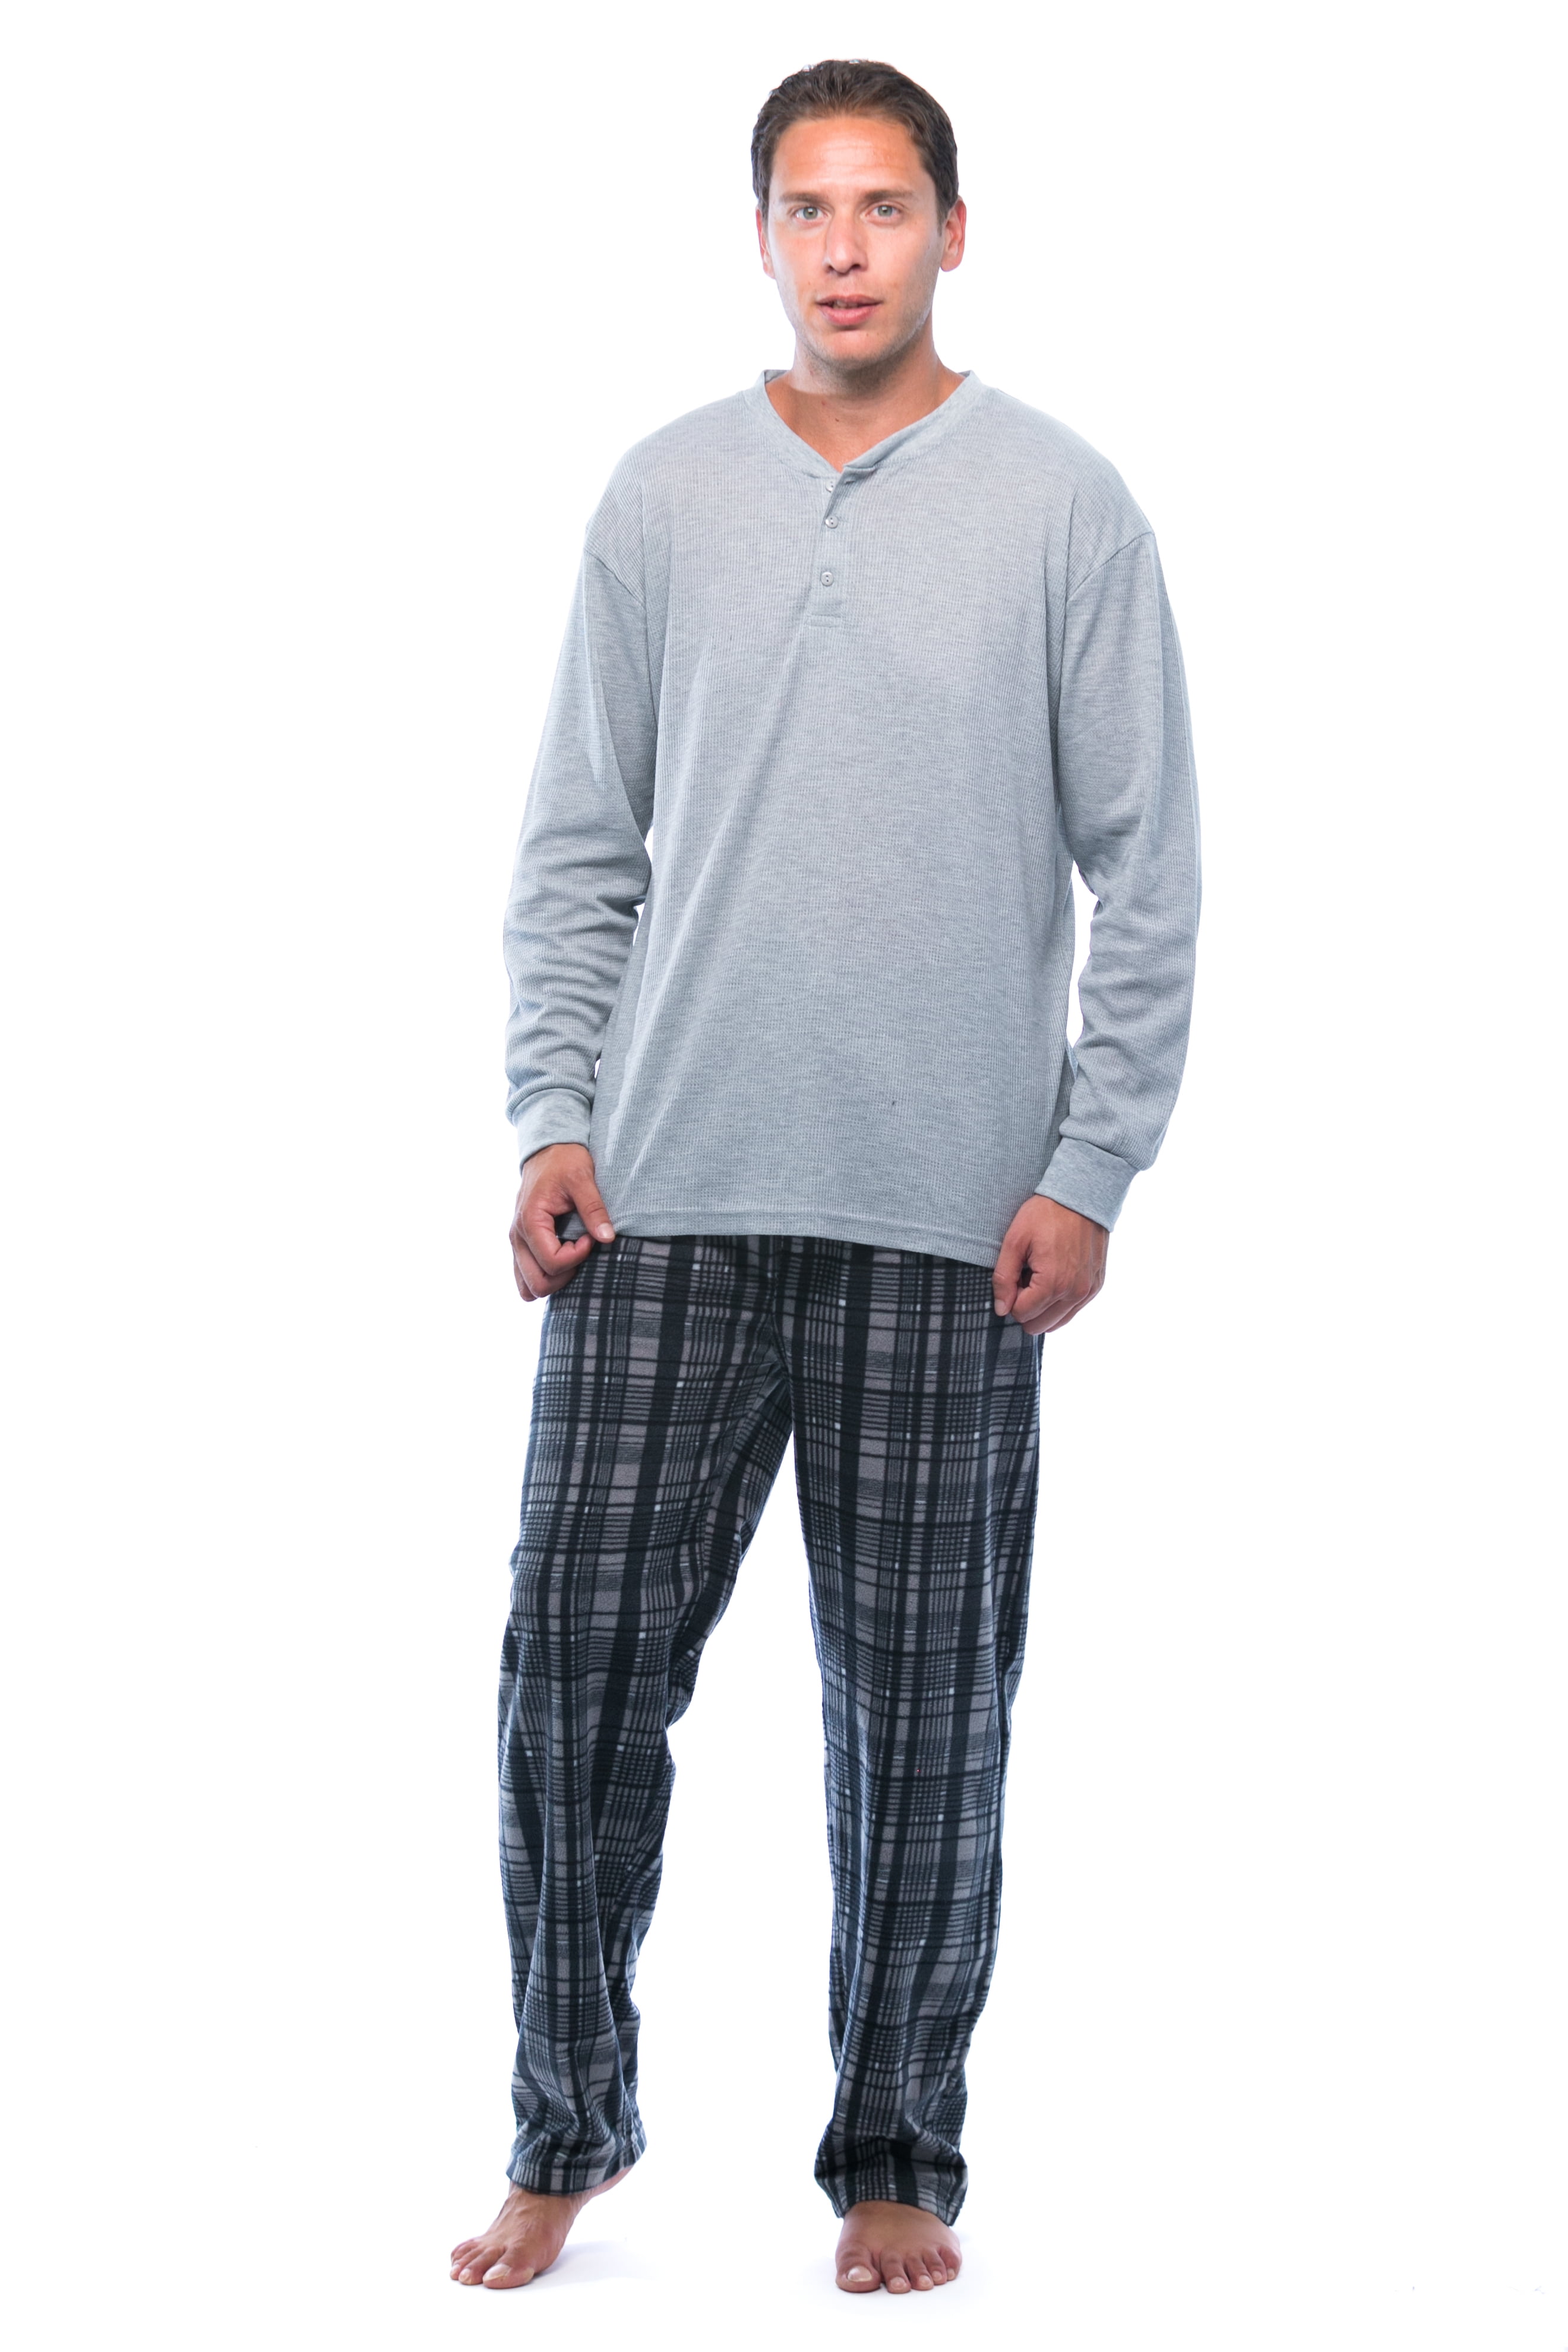 followme Fleece Pajama Pants for Men Sleepwear PJs 45903-1D-S at   Men's Clothing store